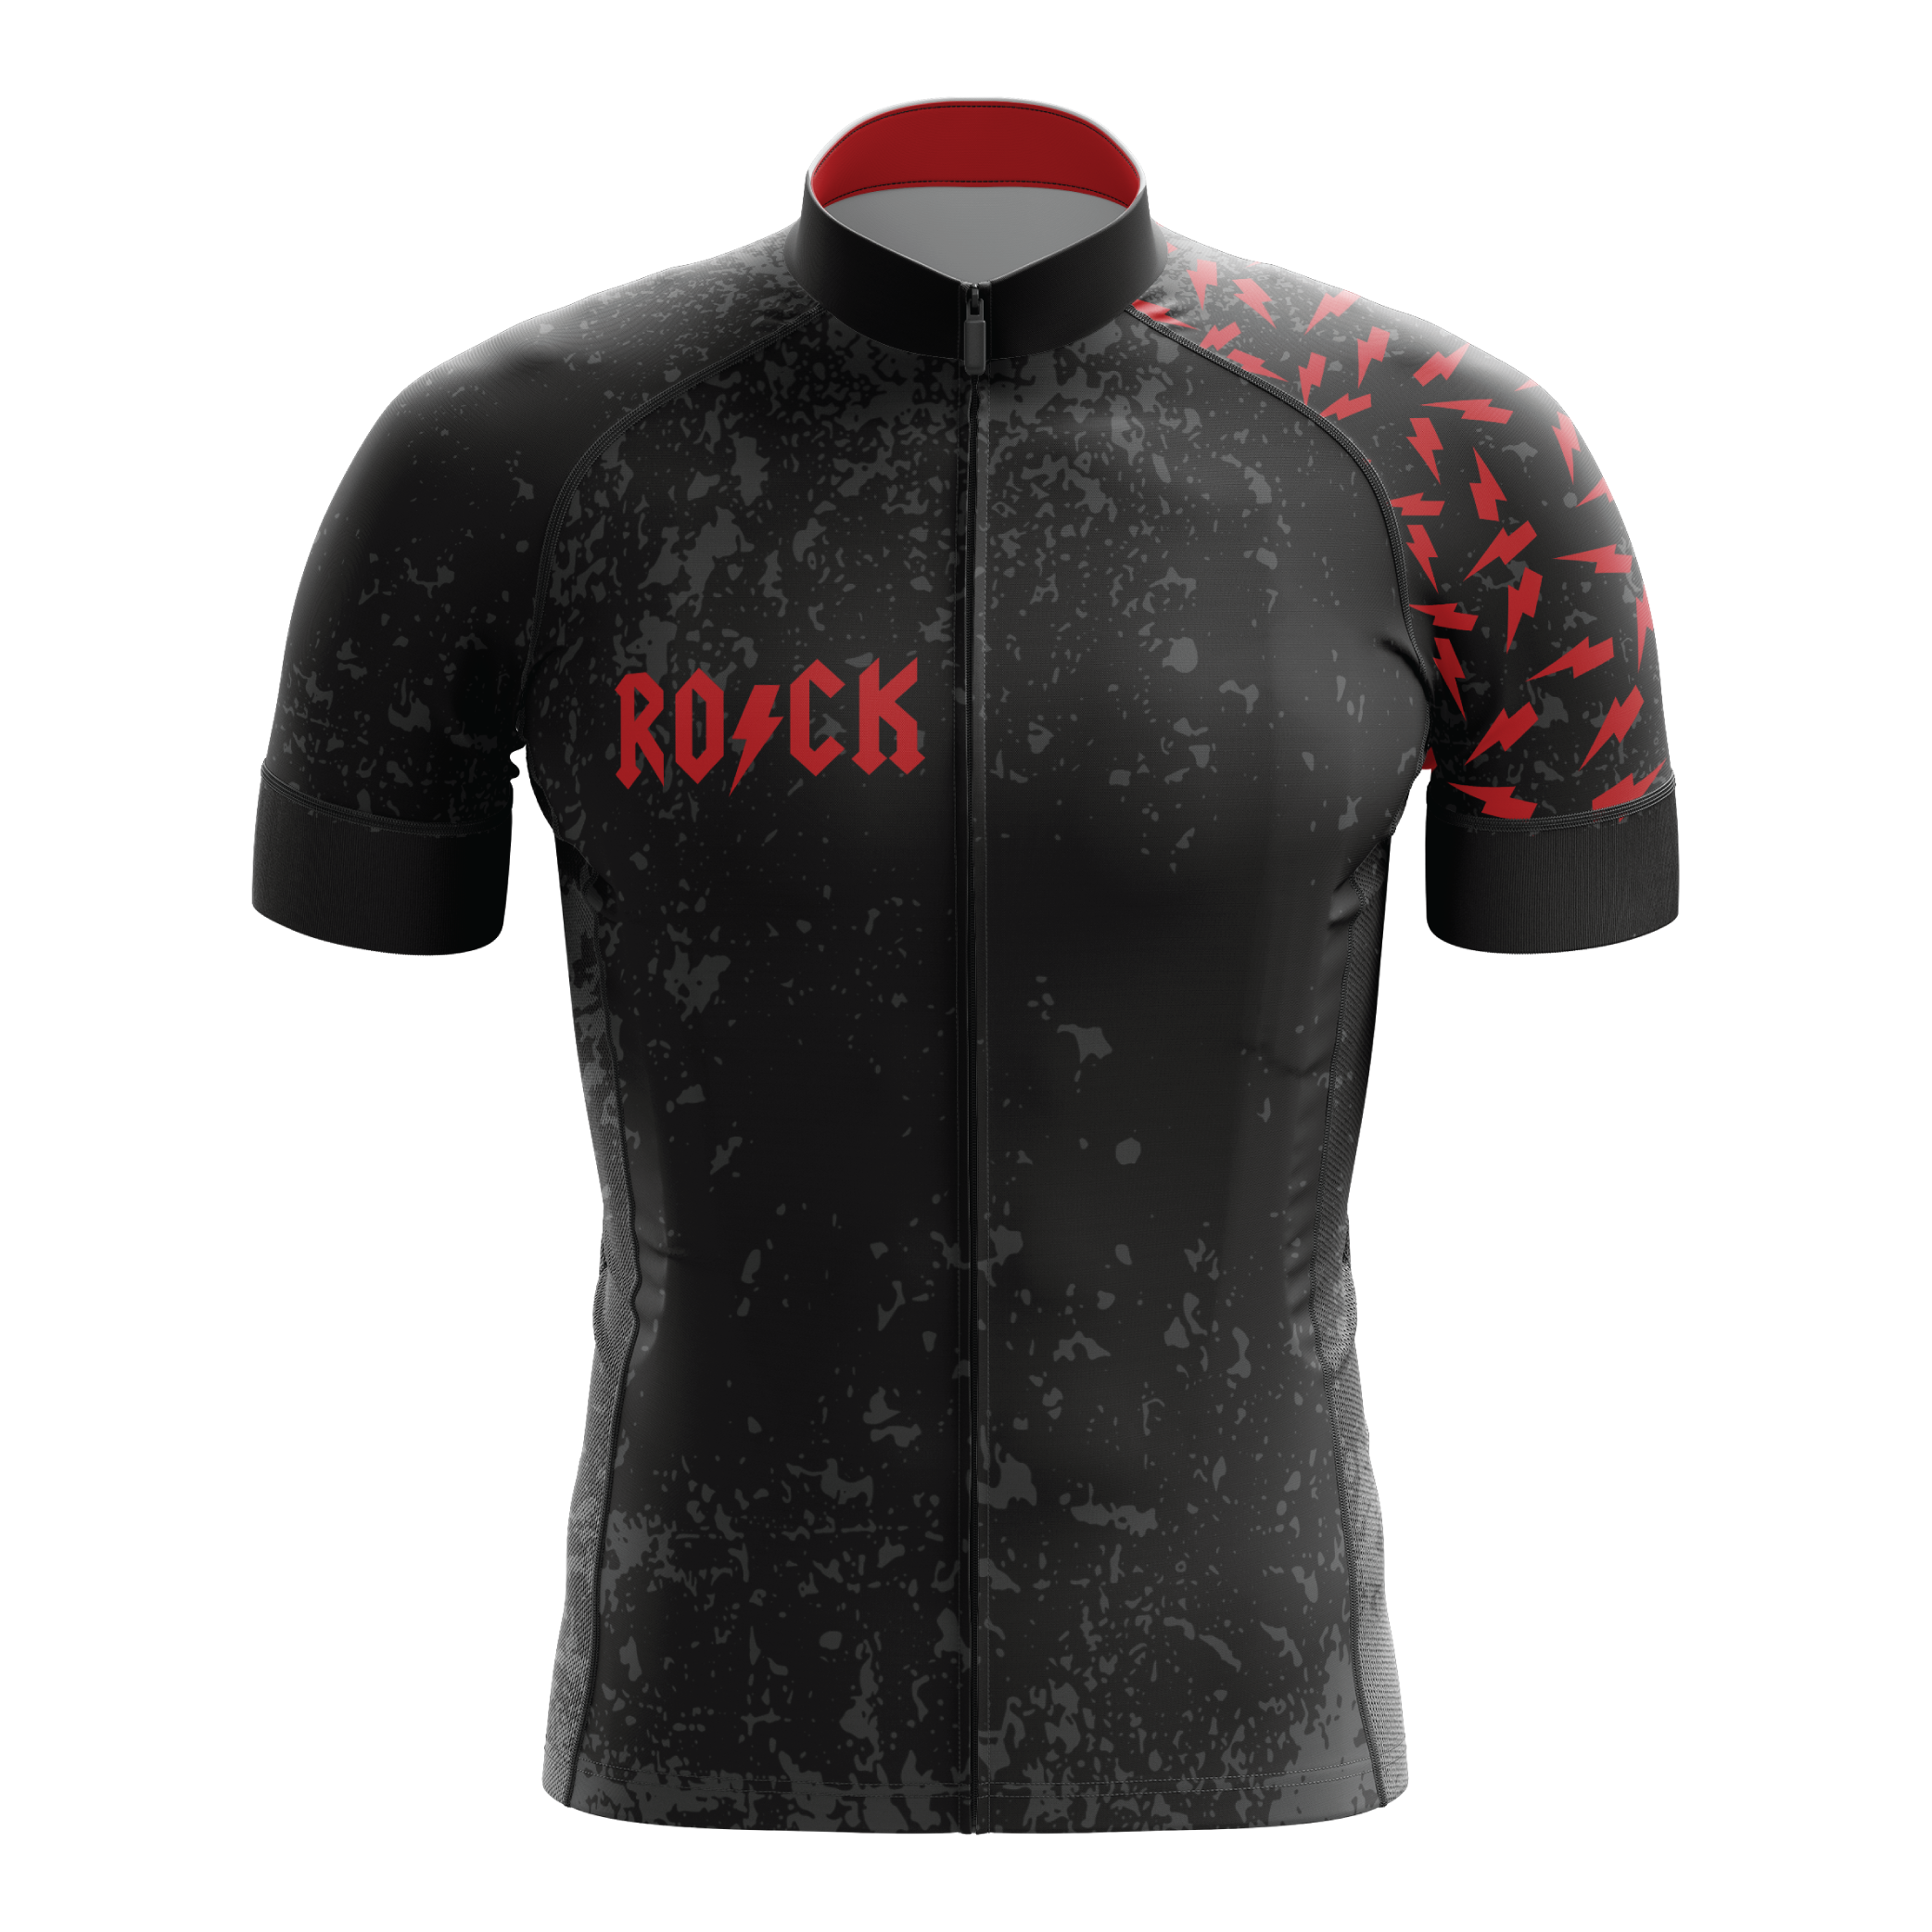 Rock Bike Team Short Sleeve Cycling Jersey